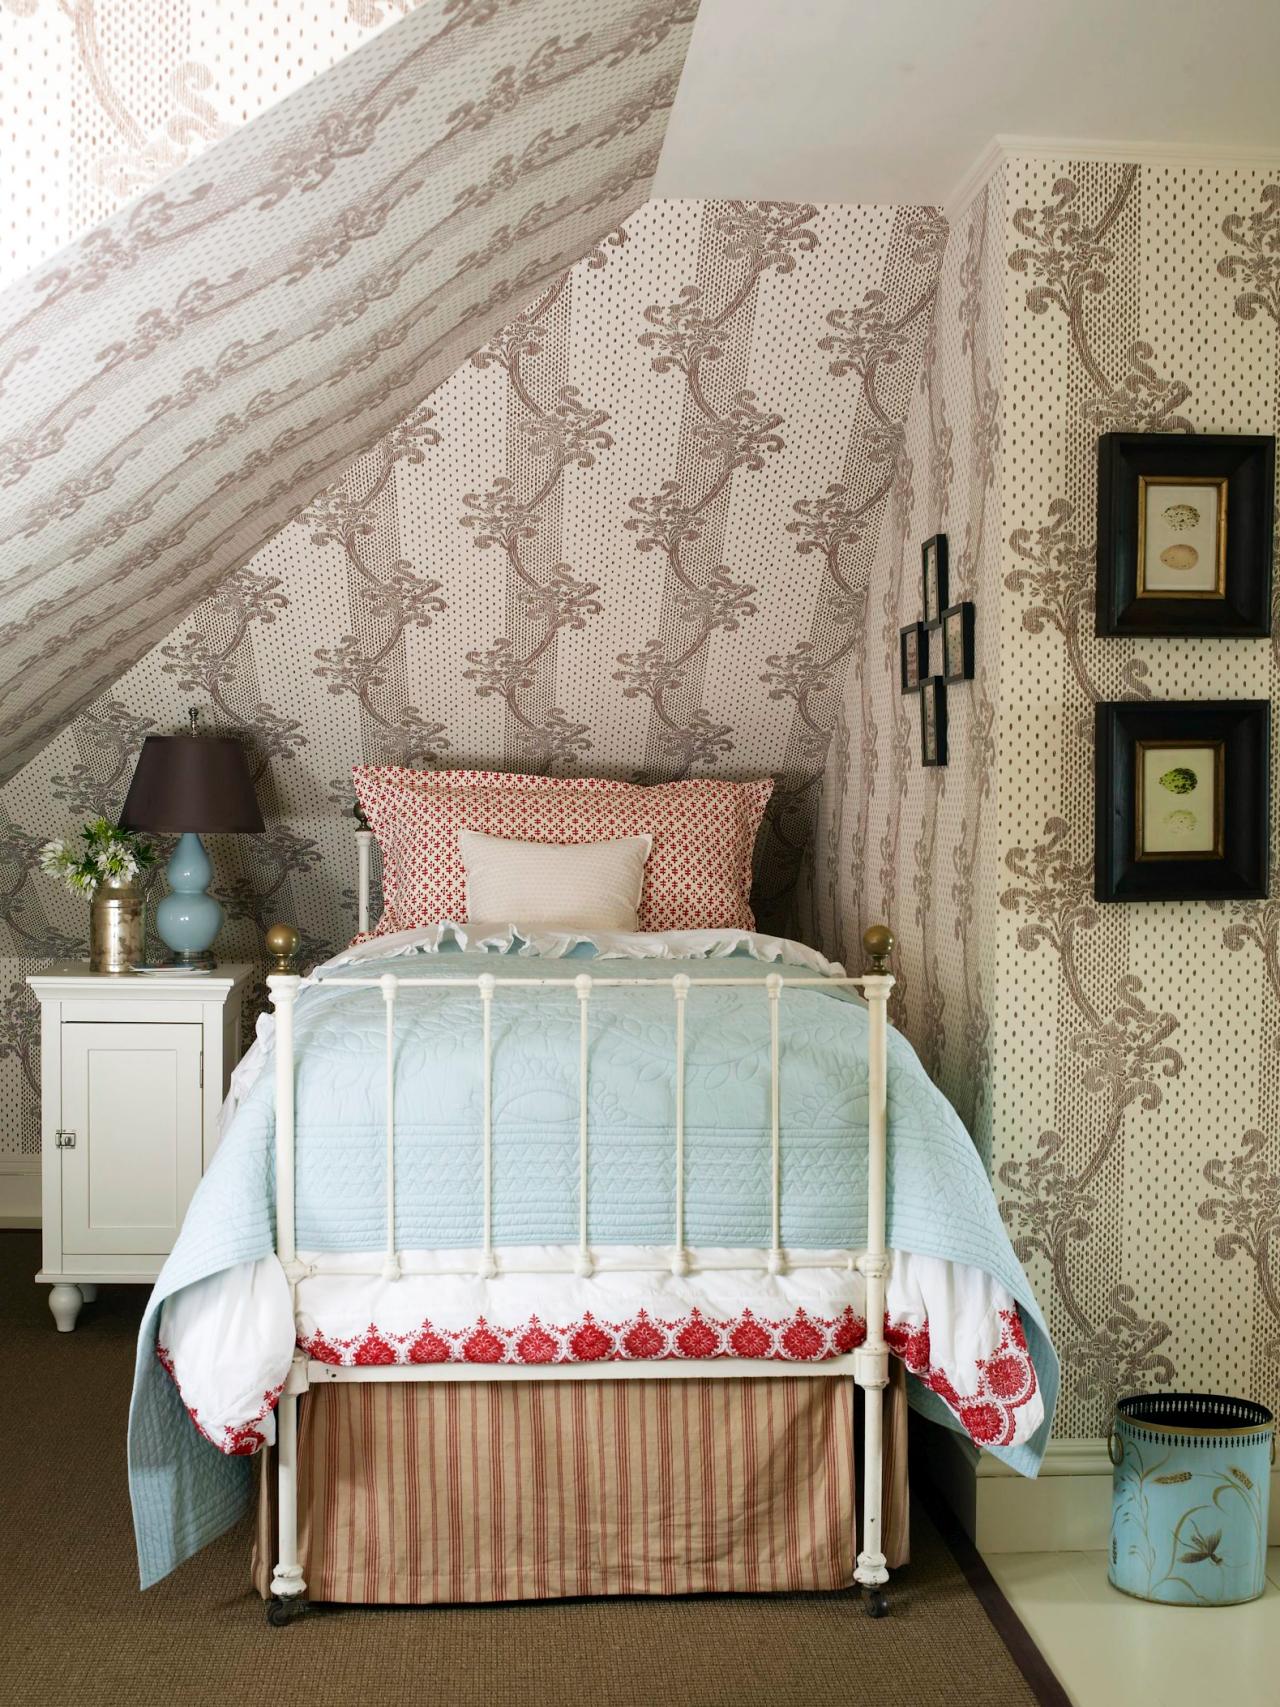 25 Shabby-Chic Style Bedroom Design Ideas - Decoration Love